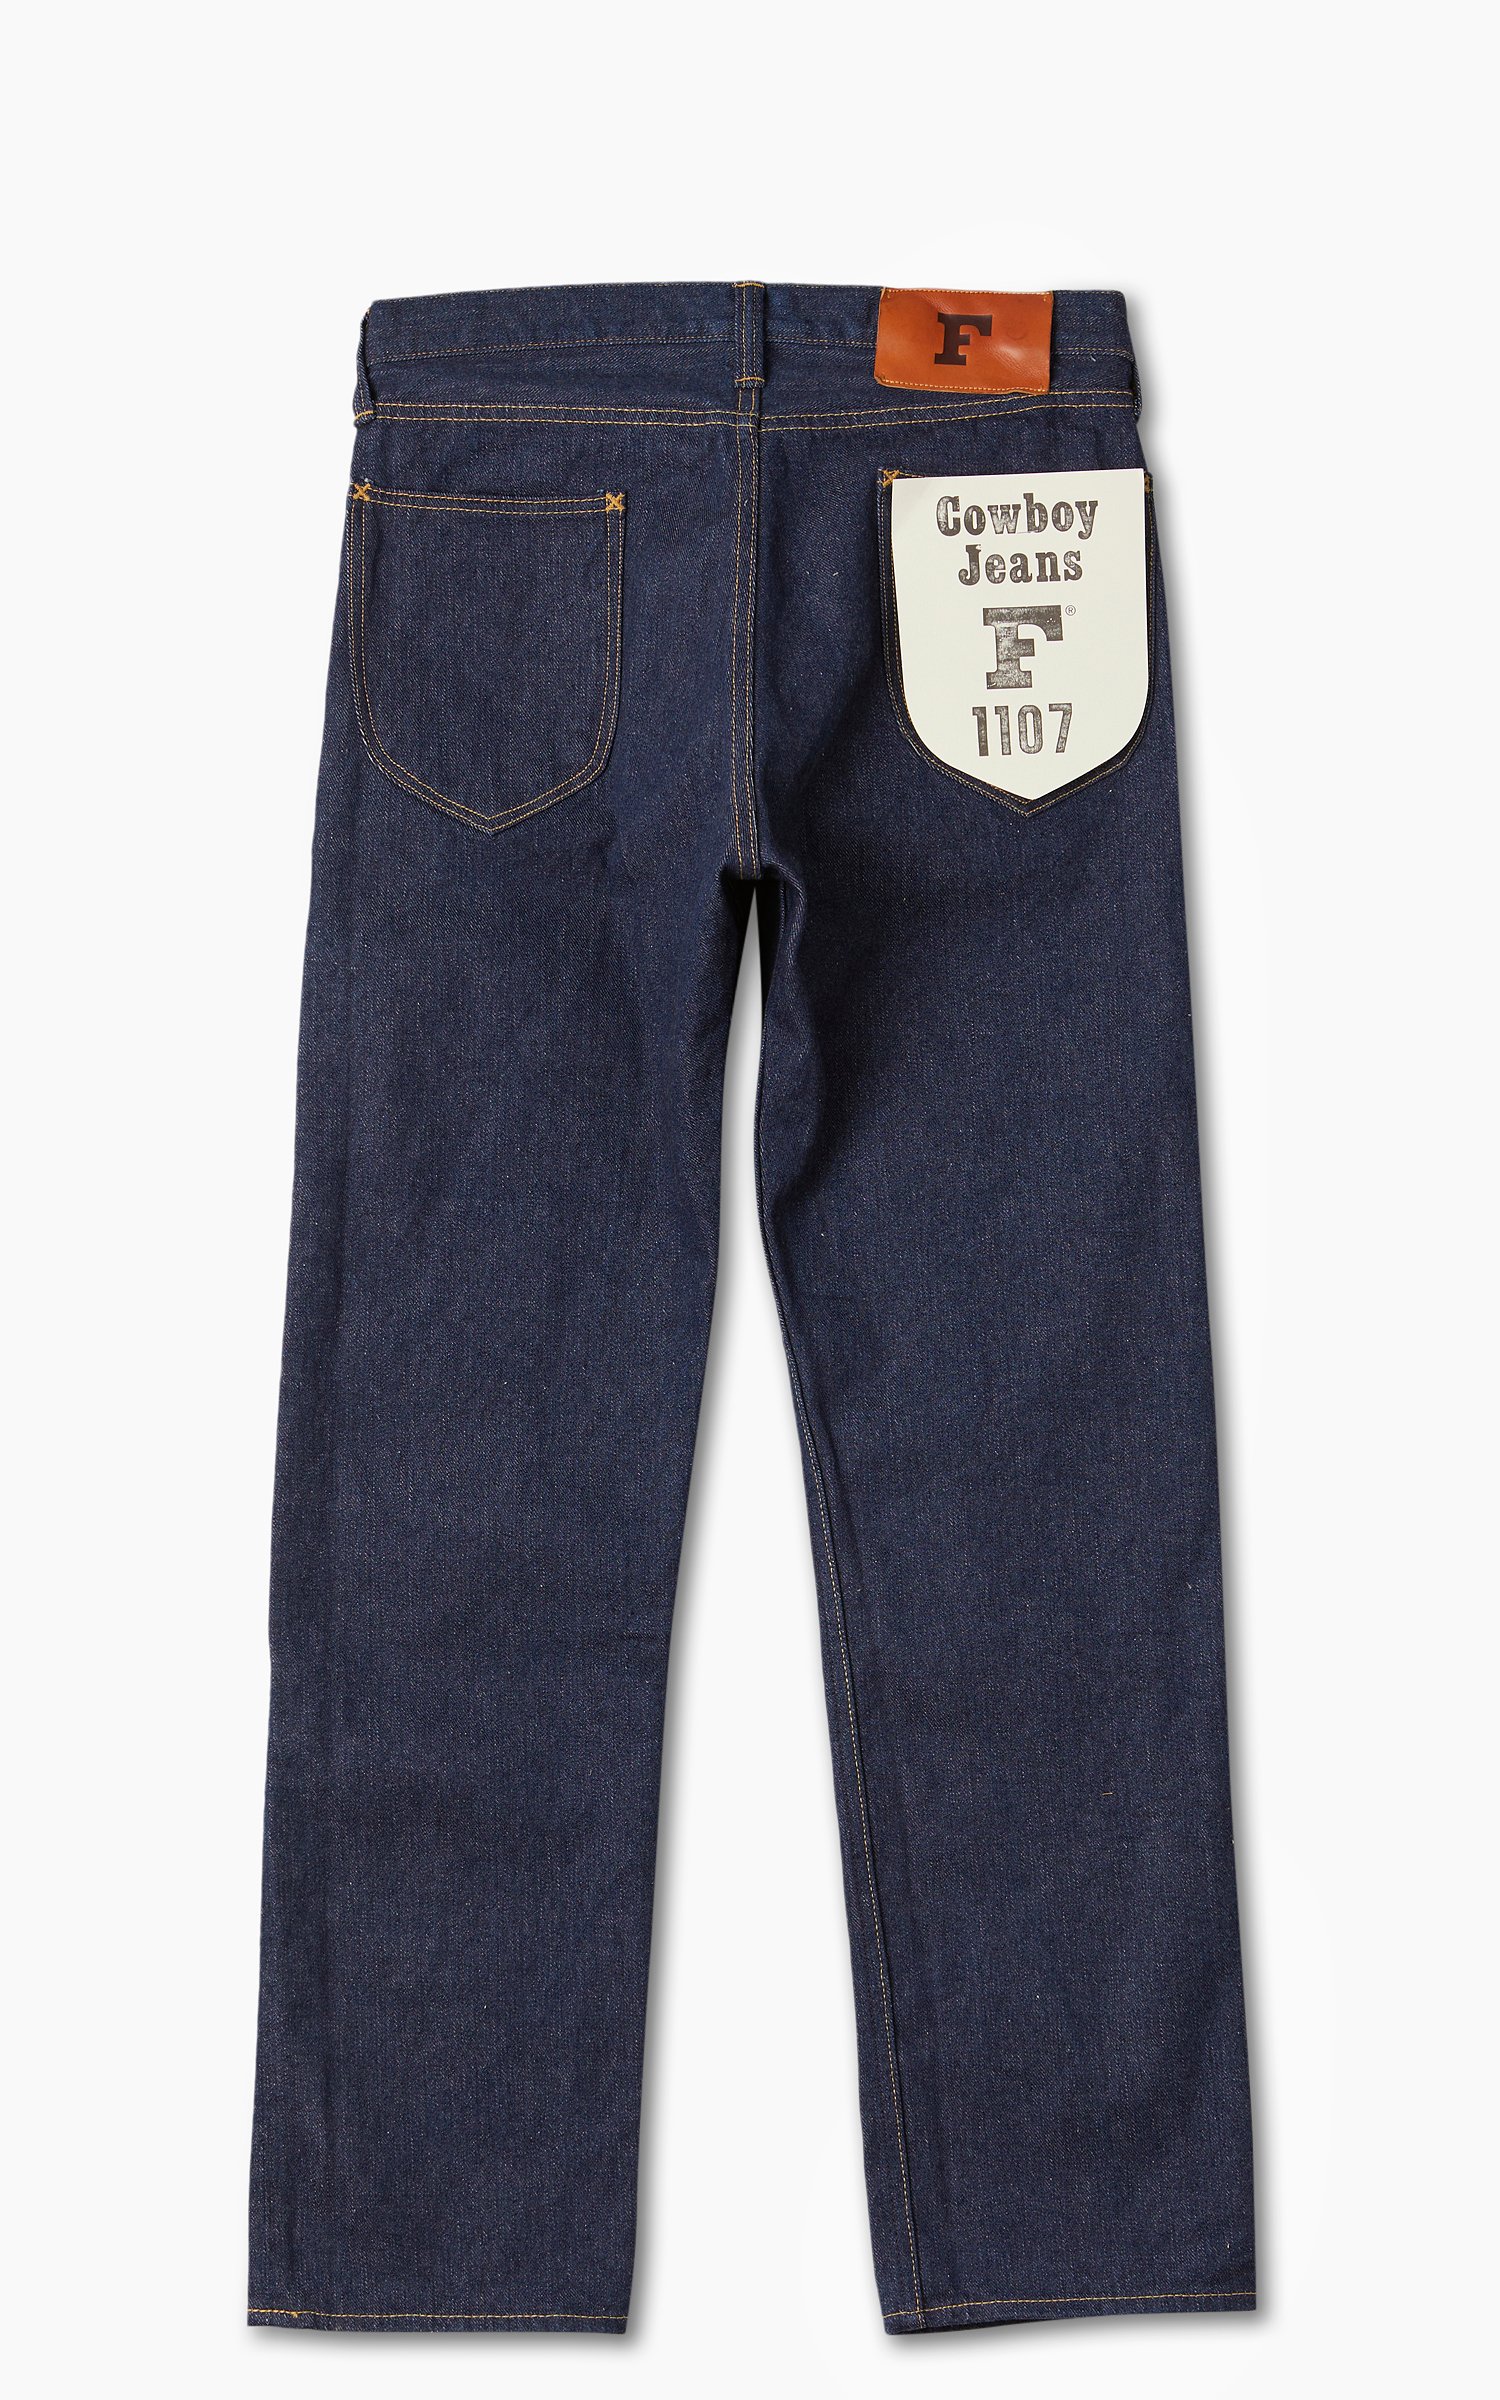 Fullcount 1107 Cowboy Jeans Left Hand Selvedge Denim Indigo 13.5oz